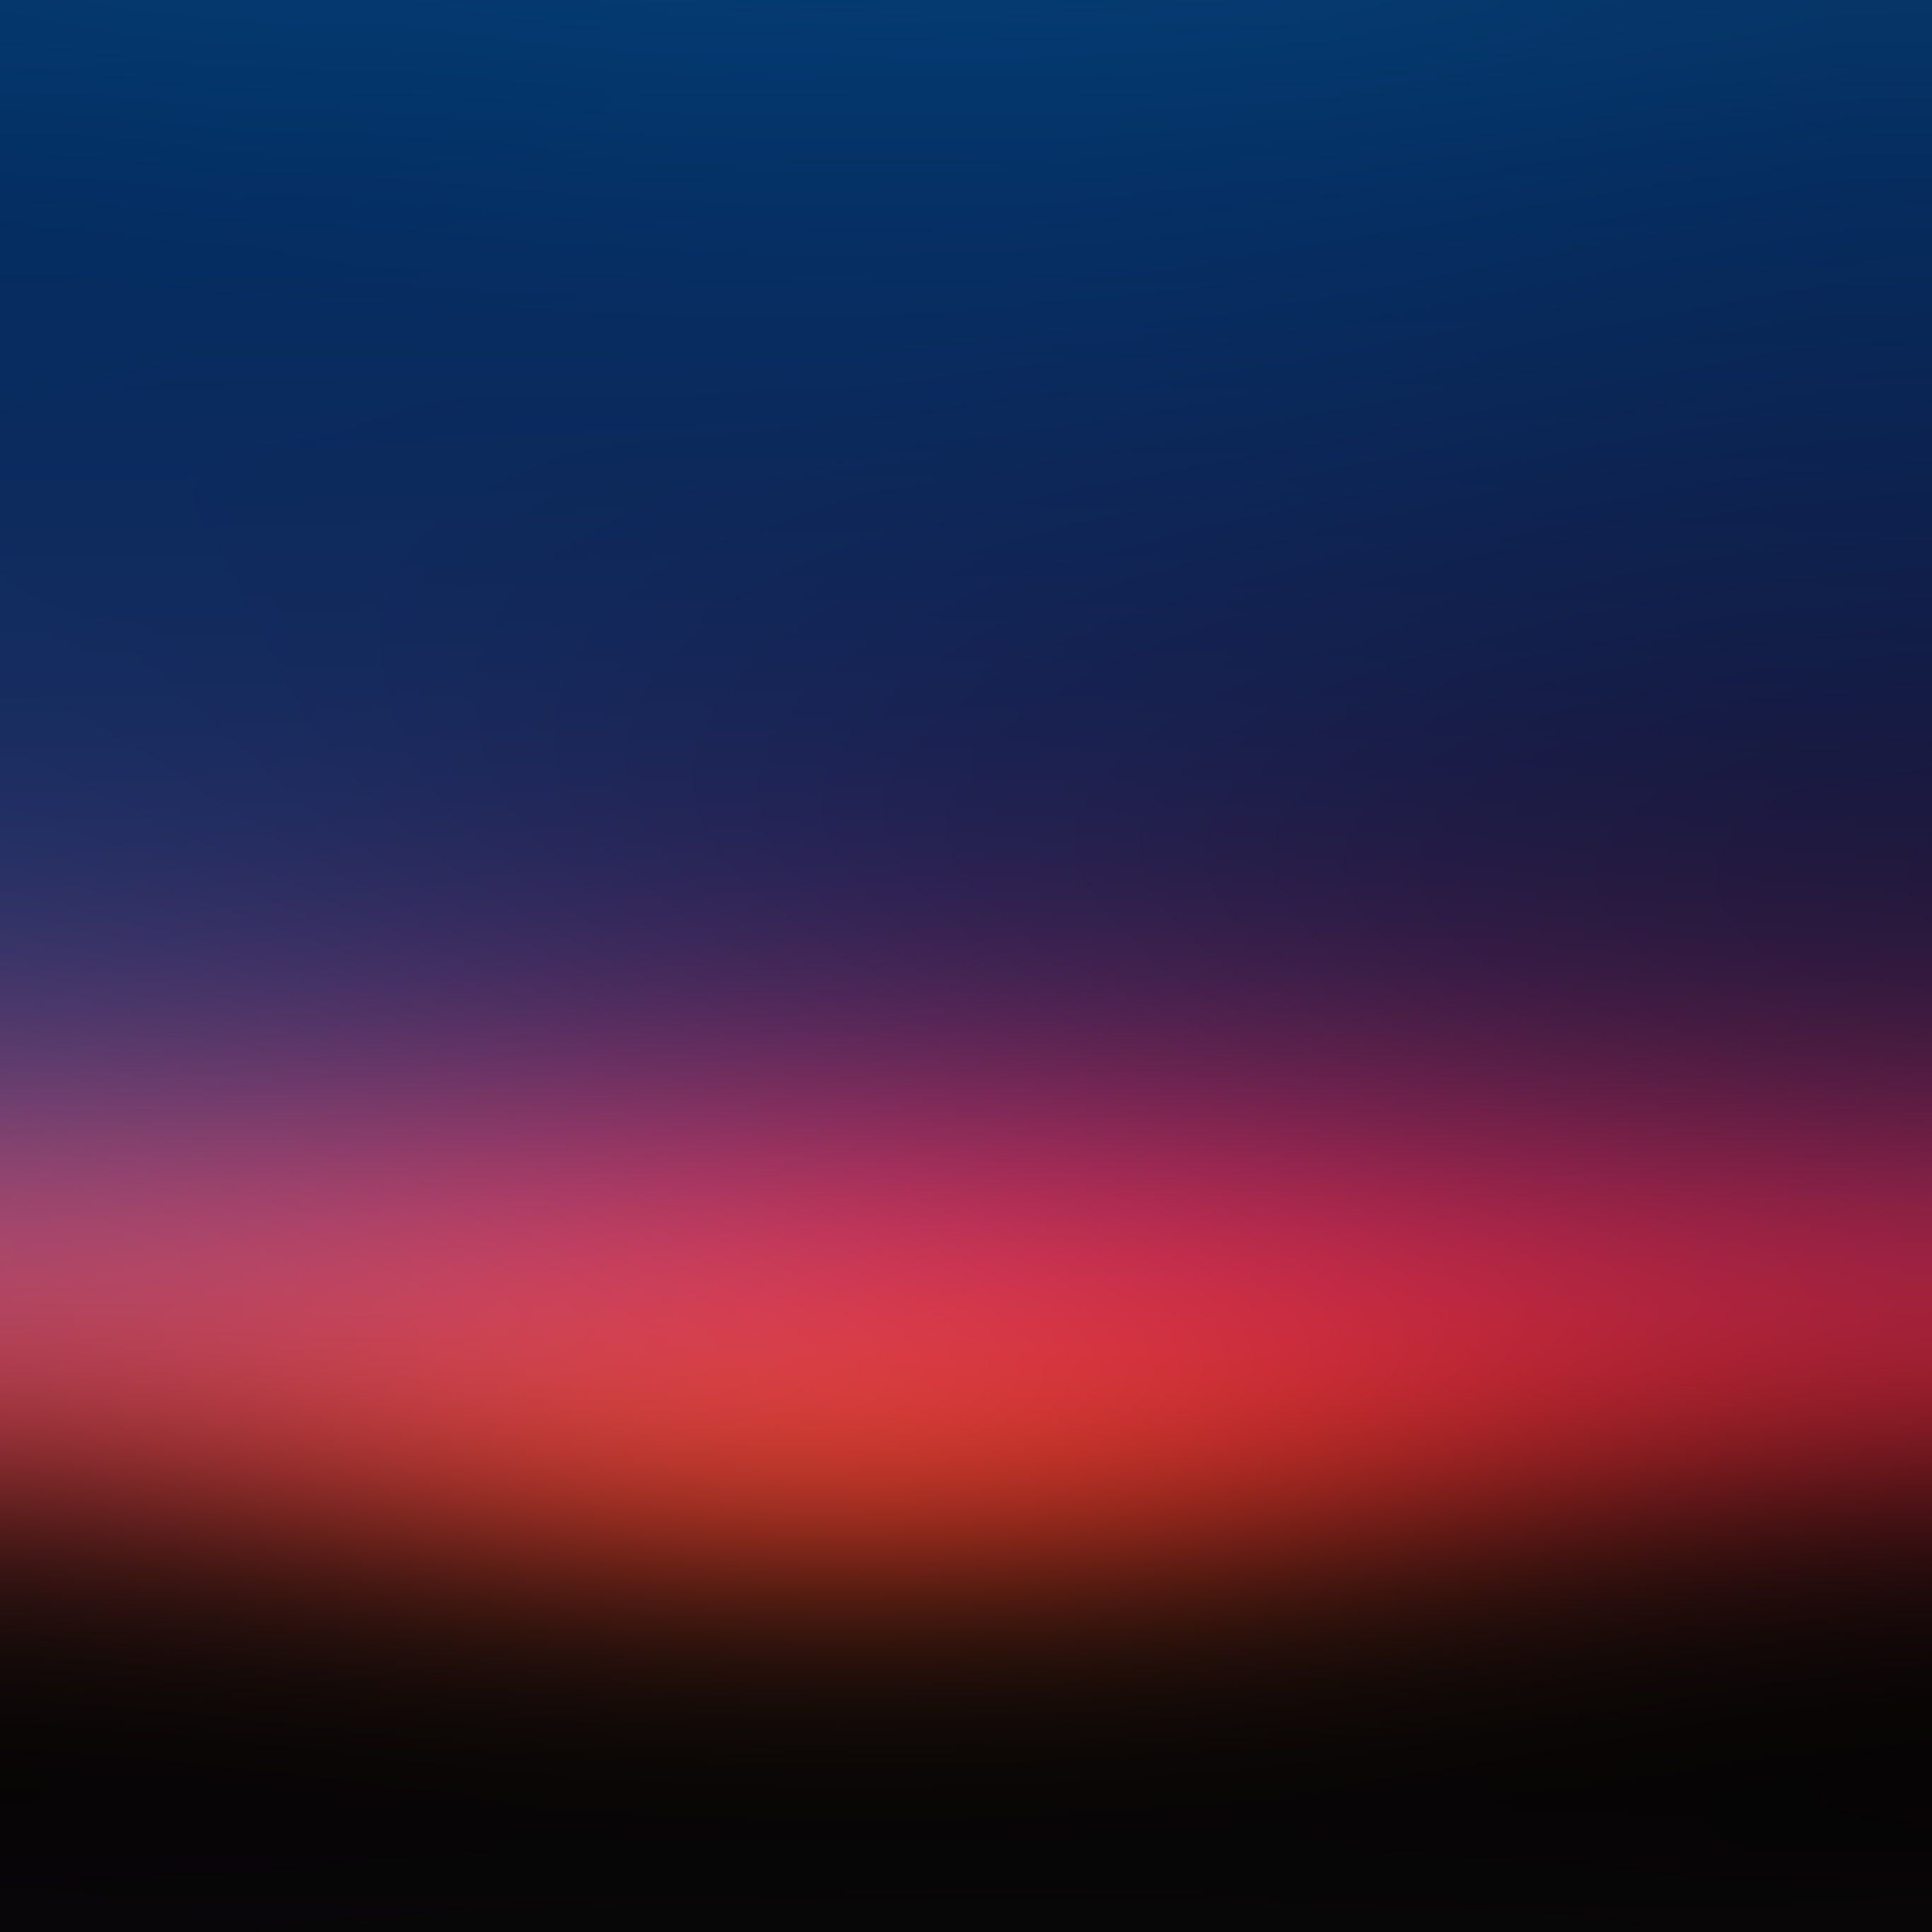 Morning Light Red Blue Blur Gradation Wallpaper